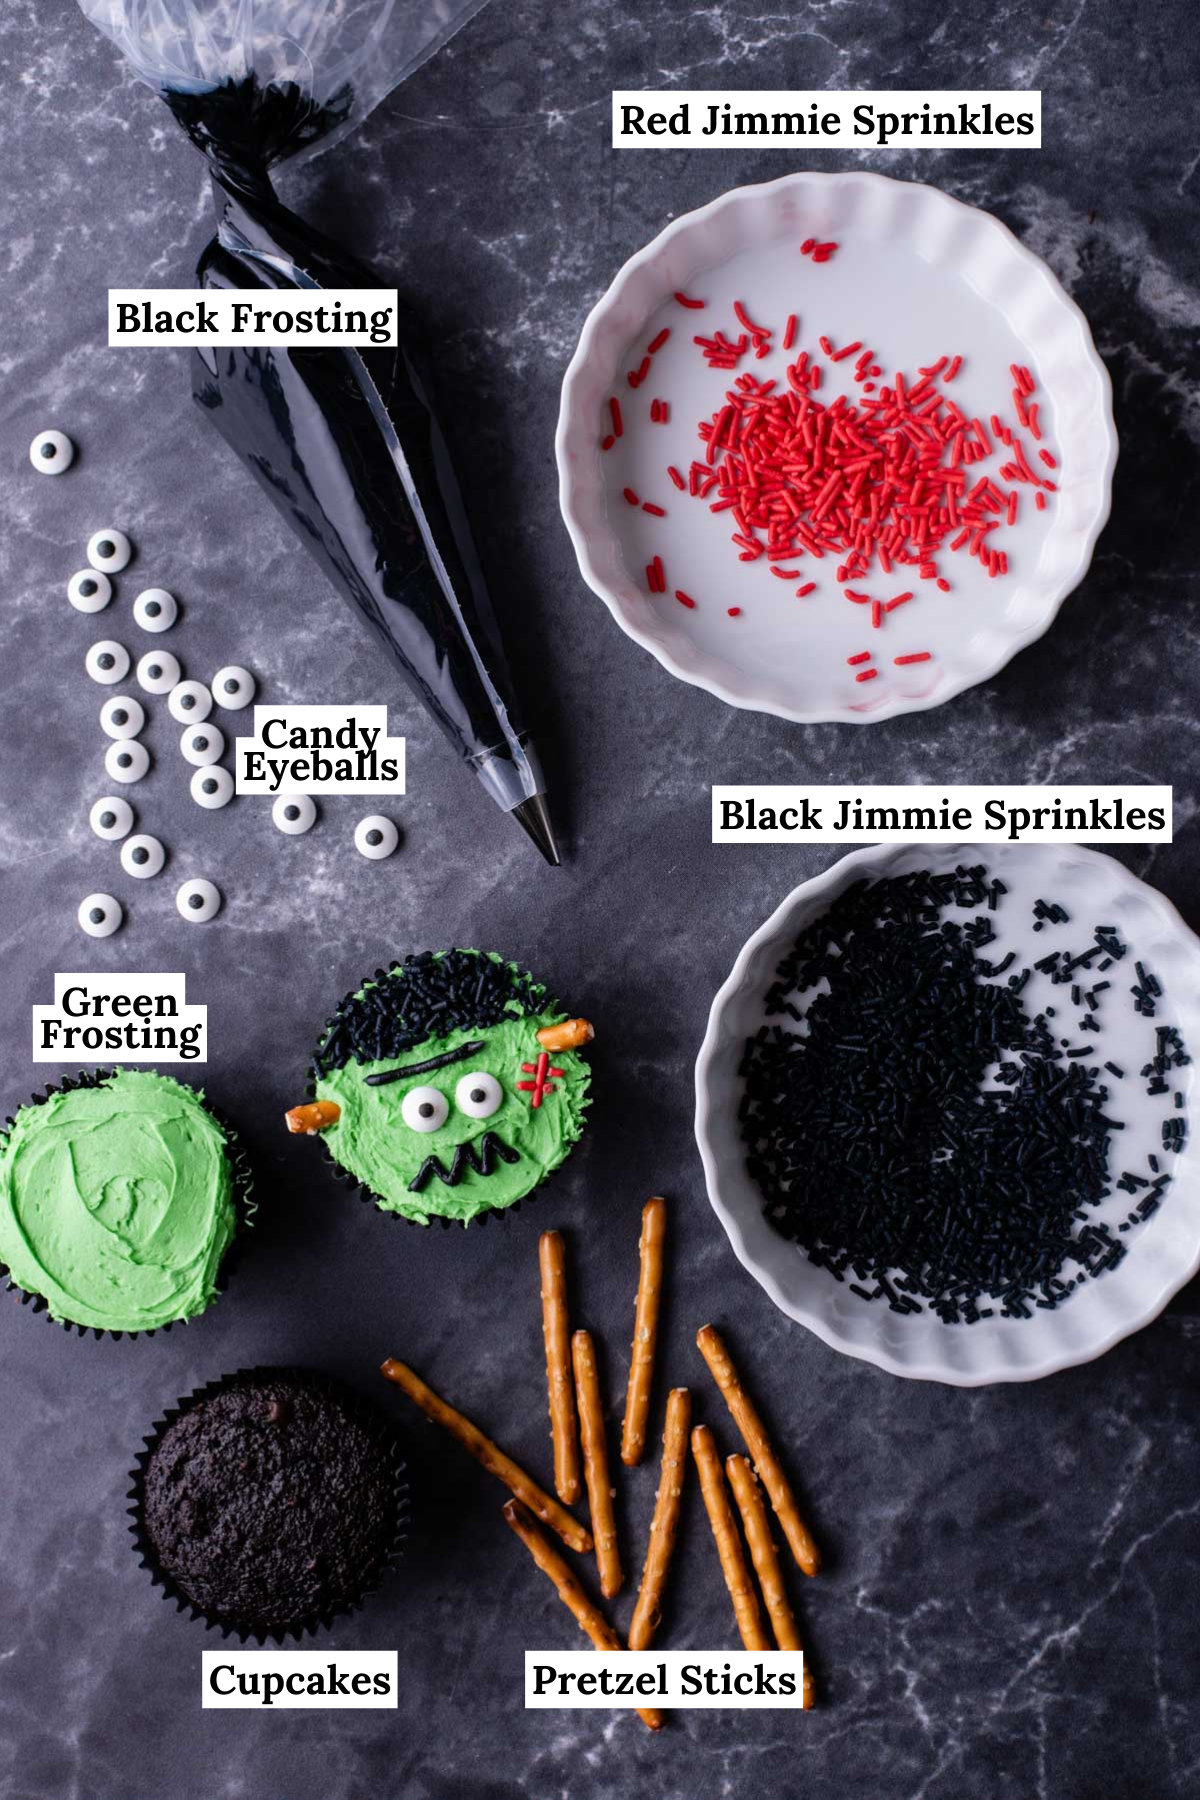 ingredients for Frankenstein cupcakes including red sprinkles, black sprinkles, chocolate cupcakes, pretzel sticks, candy eyeballs, and black frosting